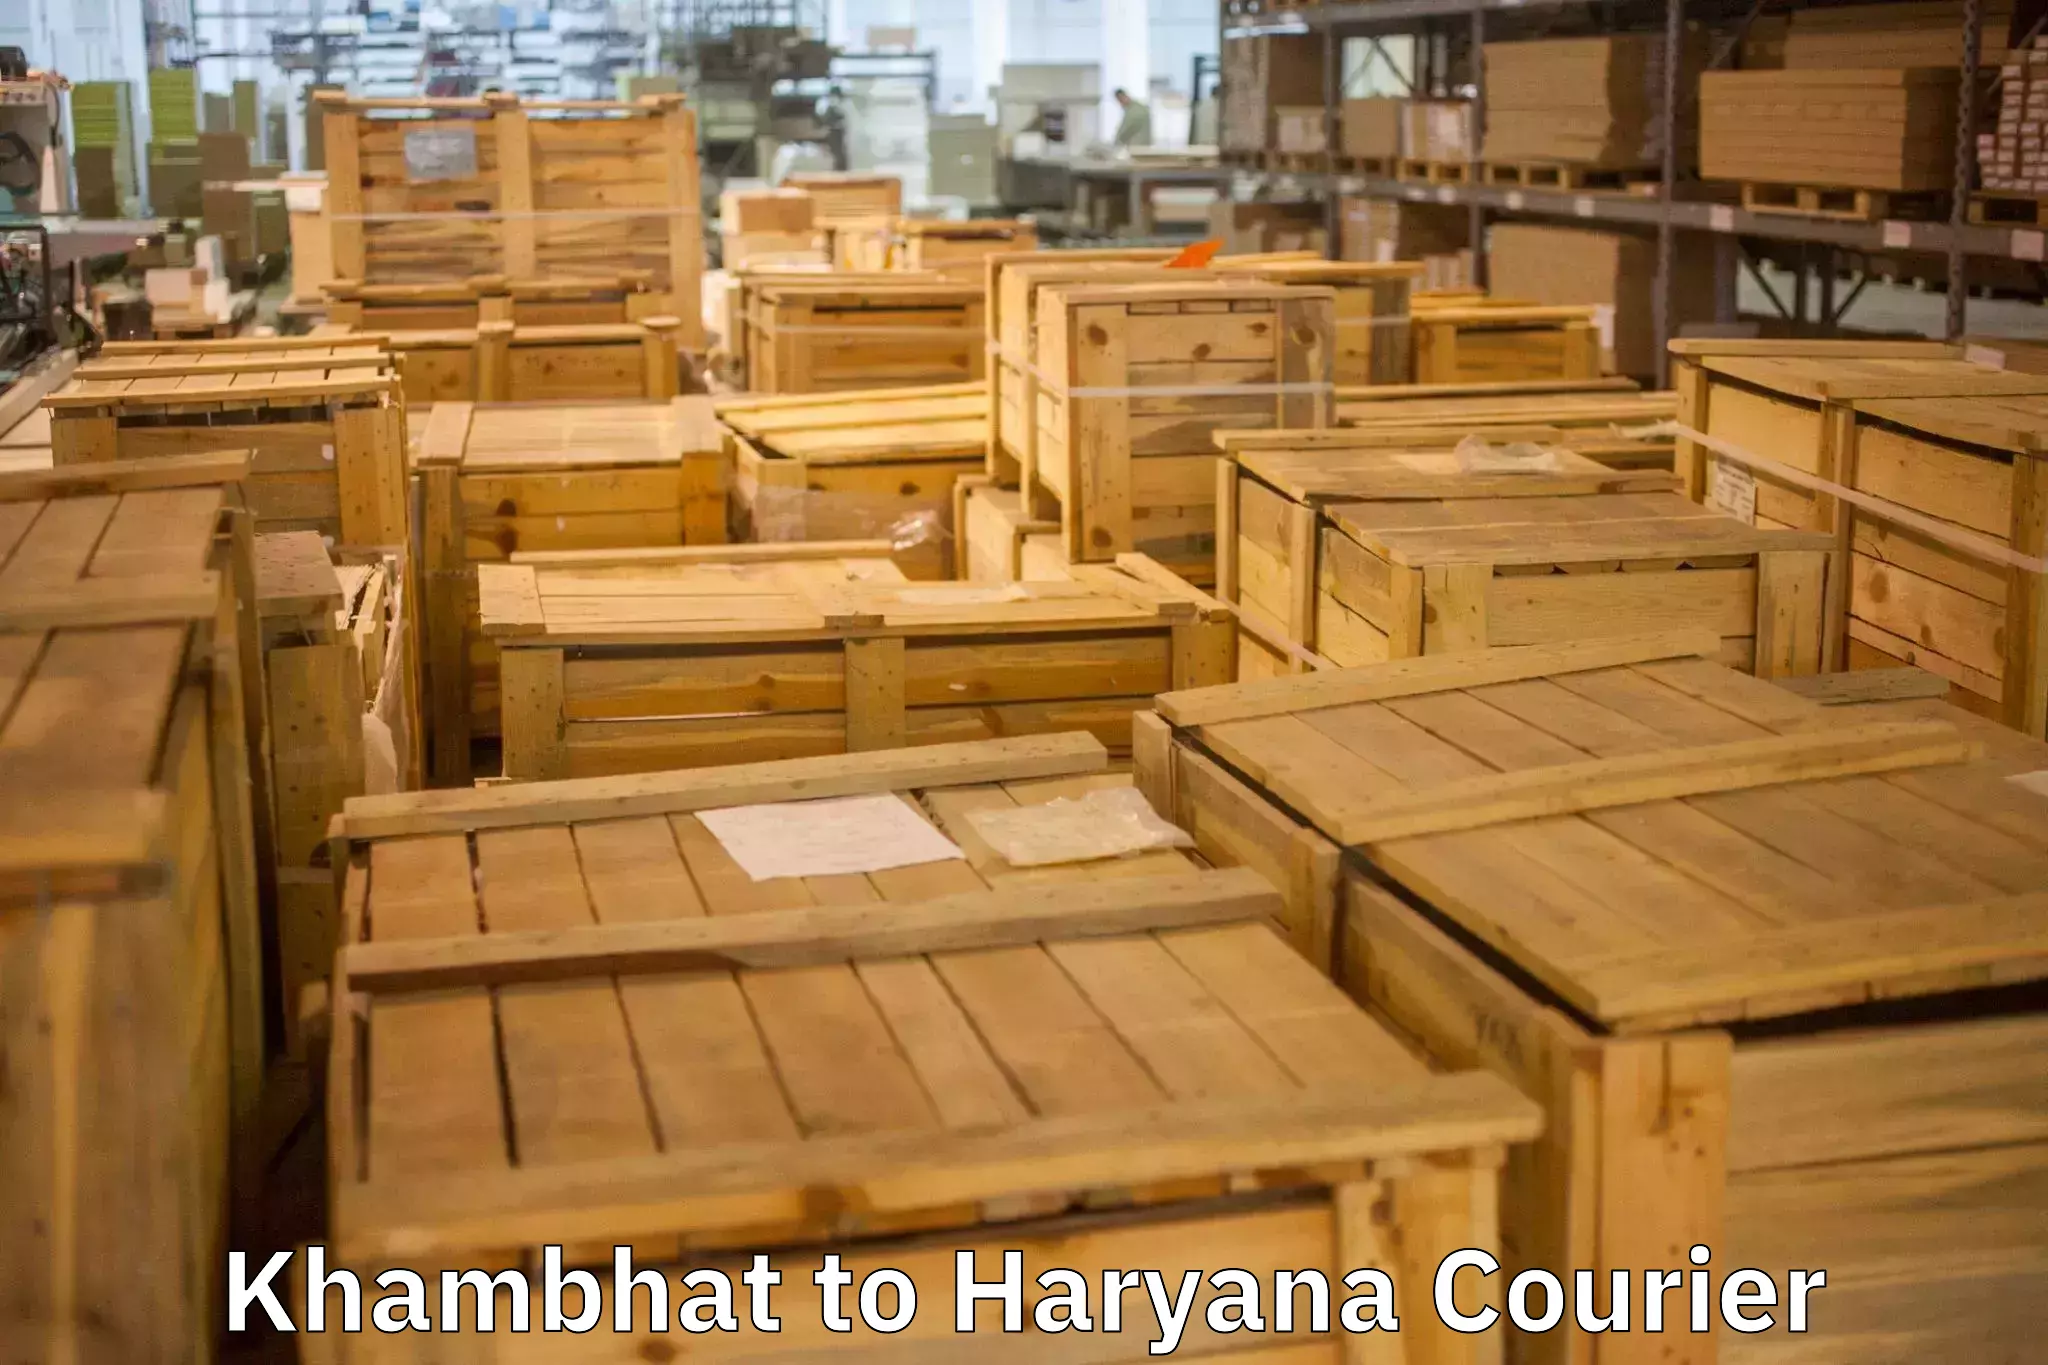 Moving and storage services Khambhat to Jhajjar